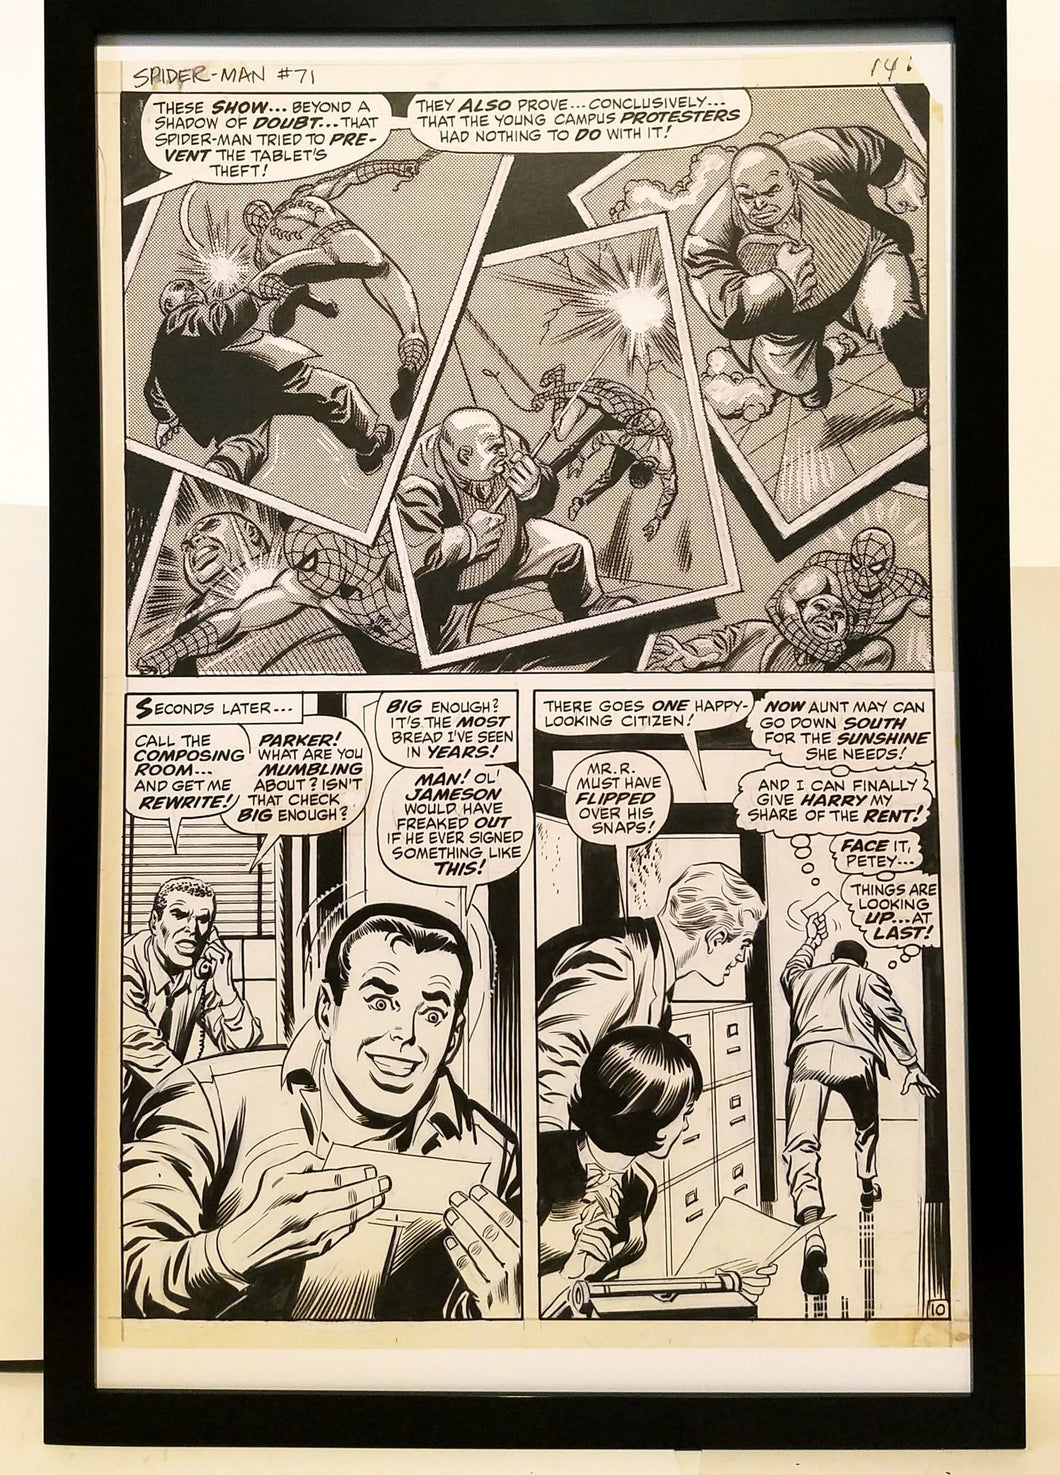 Amazing Spider-Man #71 pg. 10 John Romita 11x17 FRAMED Original Art Poster Marvel Comics